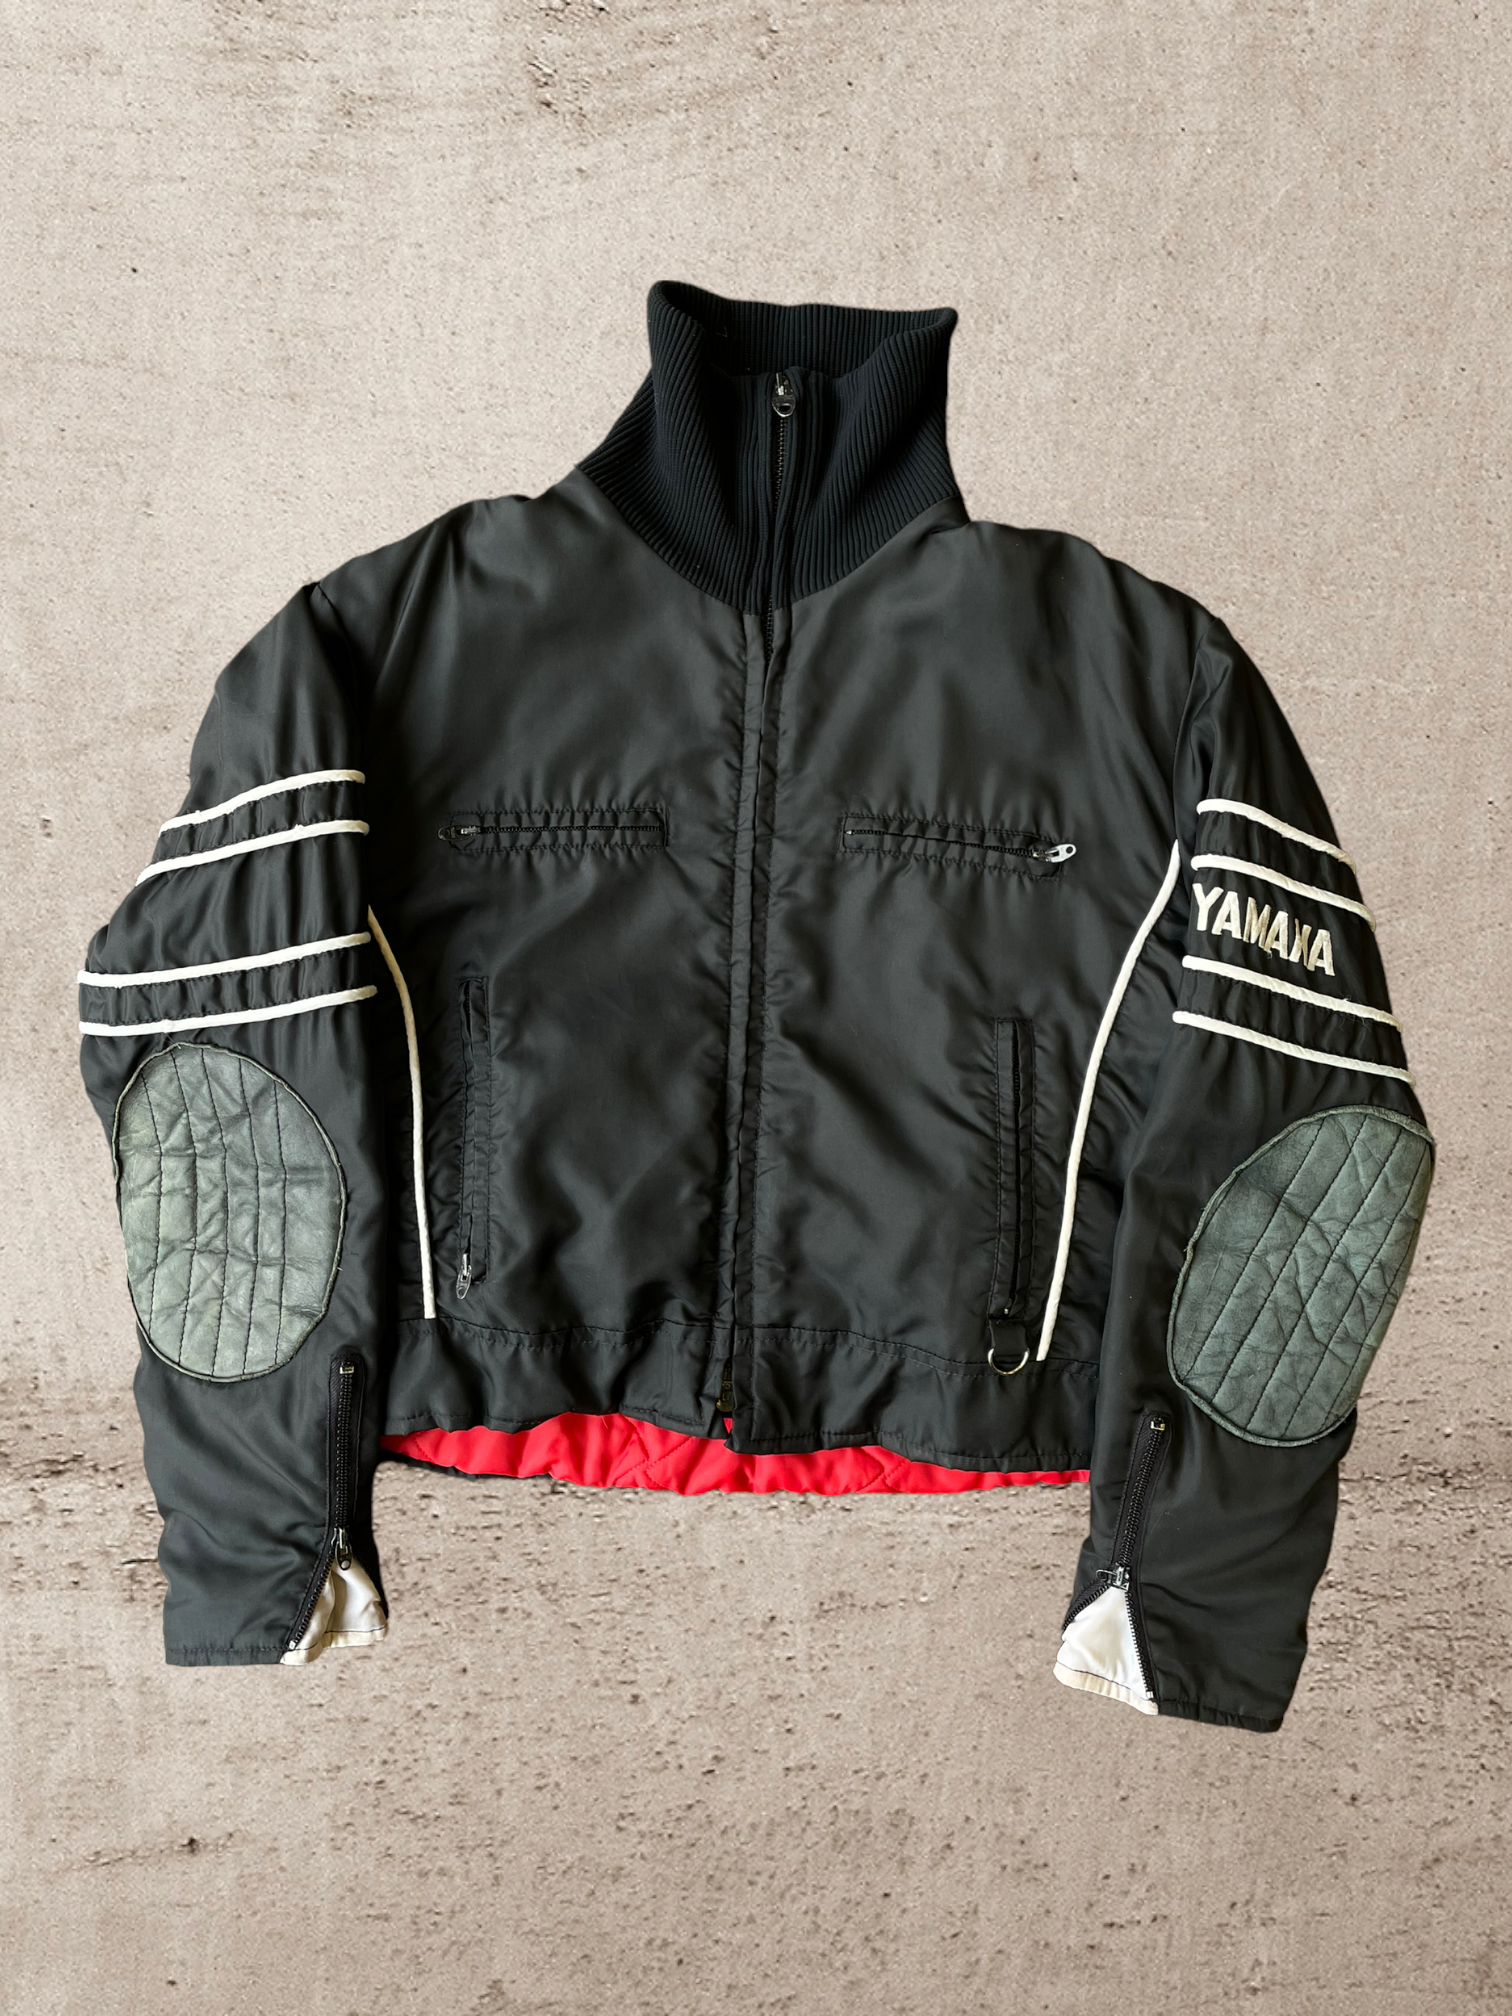 80s Yamaha Moto Racing Jacket - Large